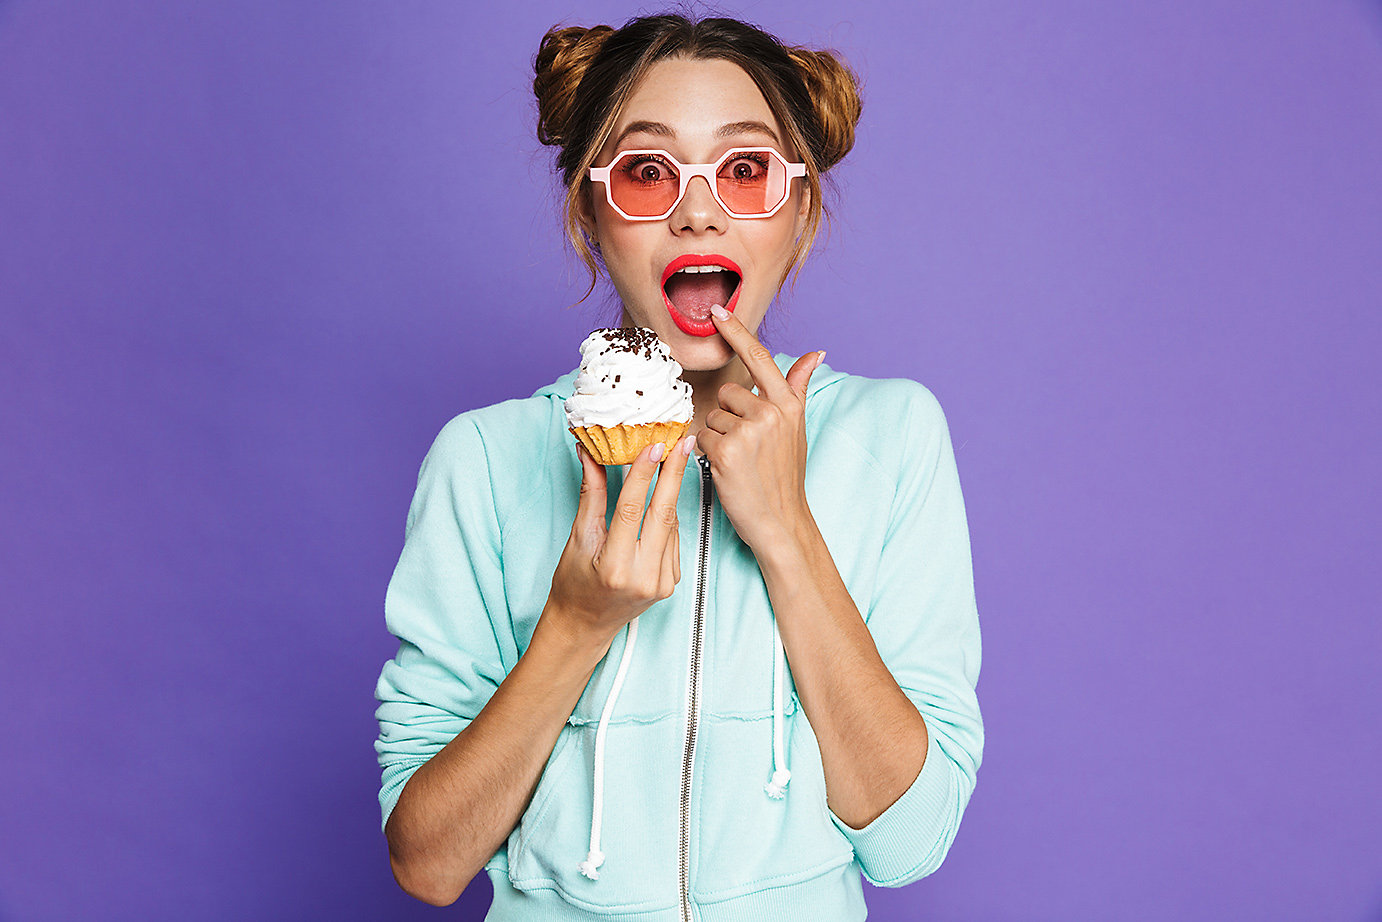 person eating cupcake